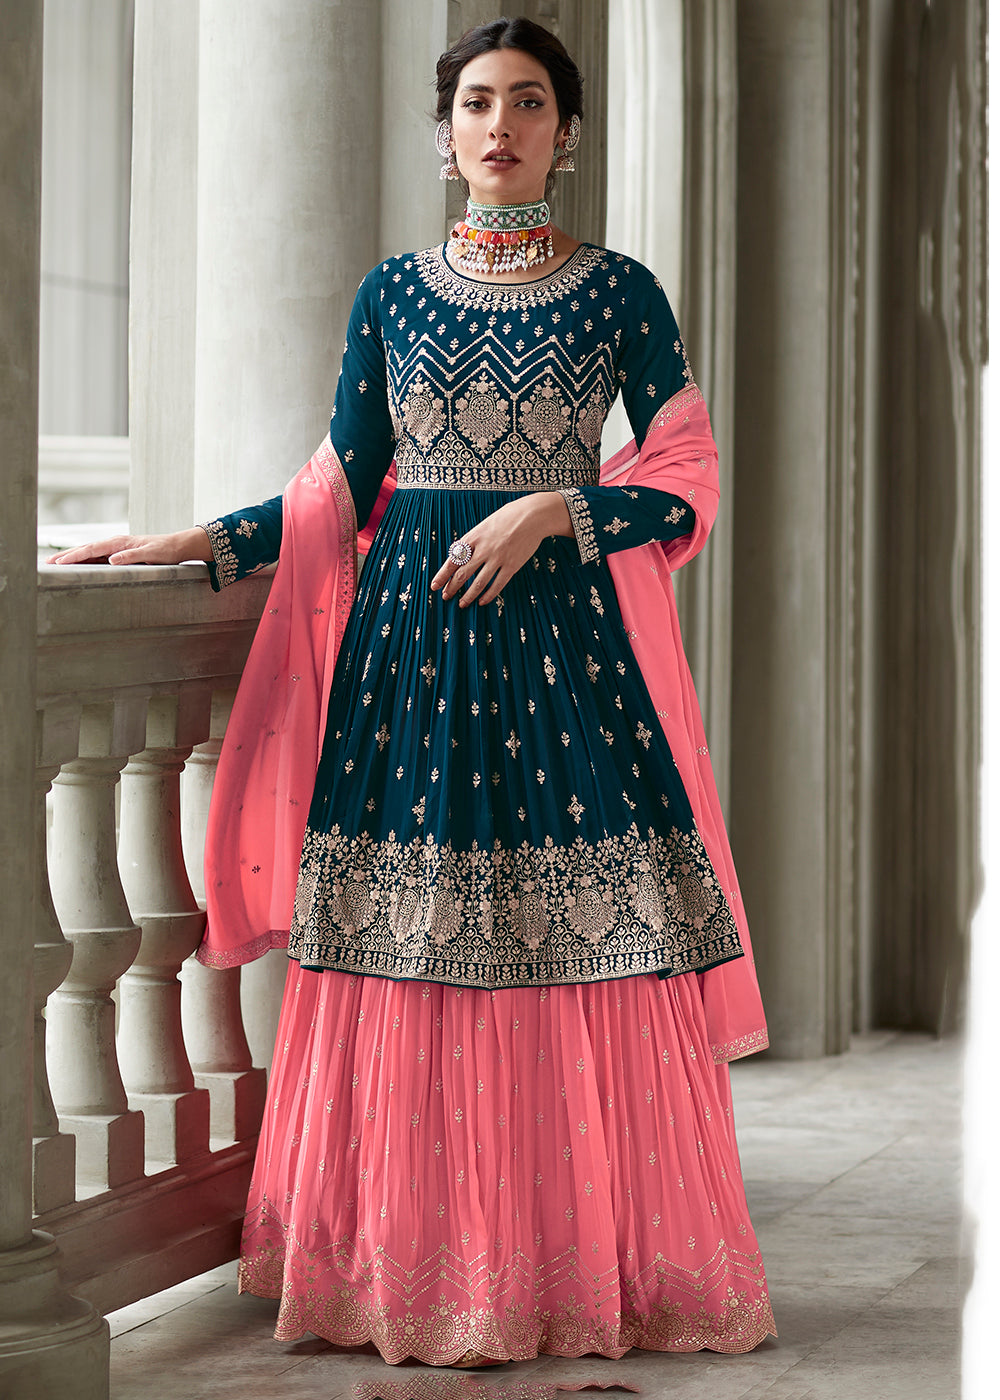 Buy Now Charming Blue & Pink Sharara Top Style Lehenga Anarkali Online in USA, UK, Australia, New Zealand, Canada & Worldwide at Empress Clothing.